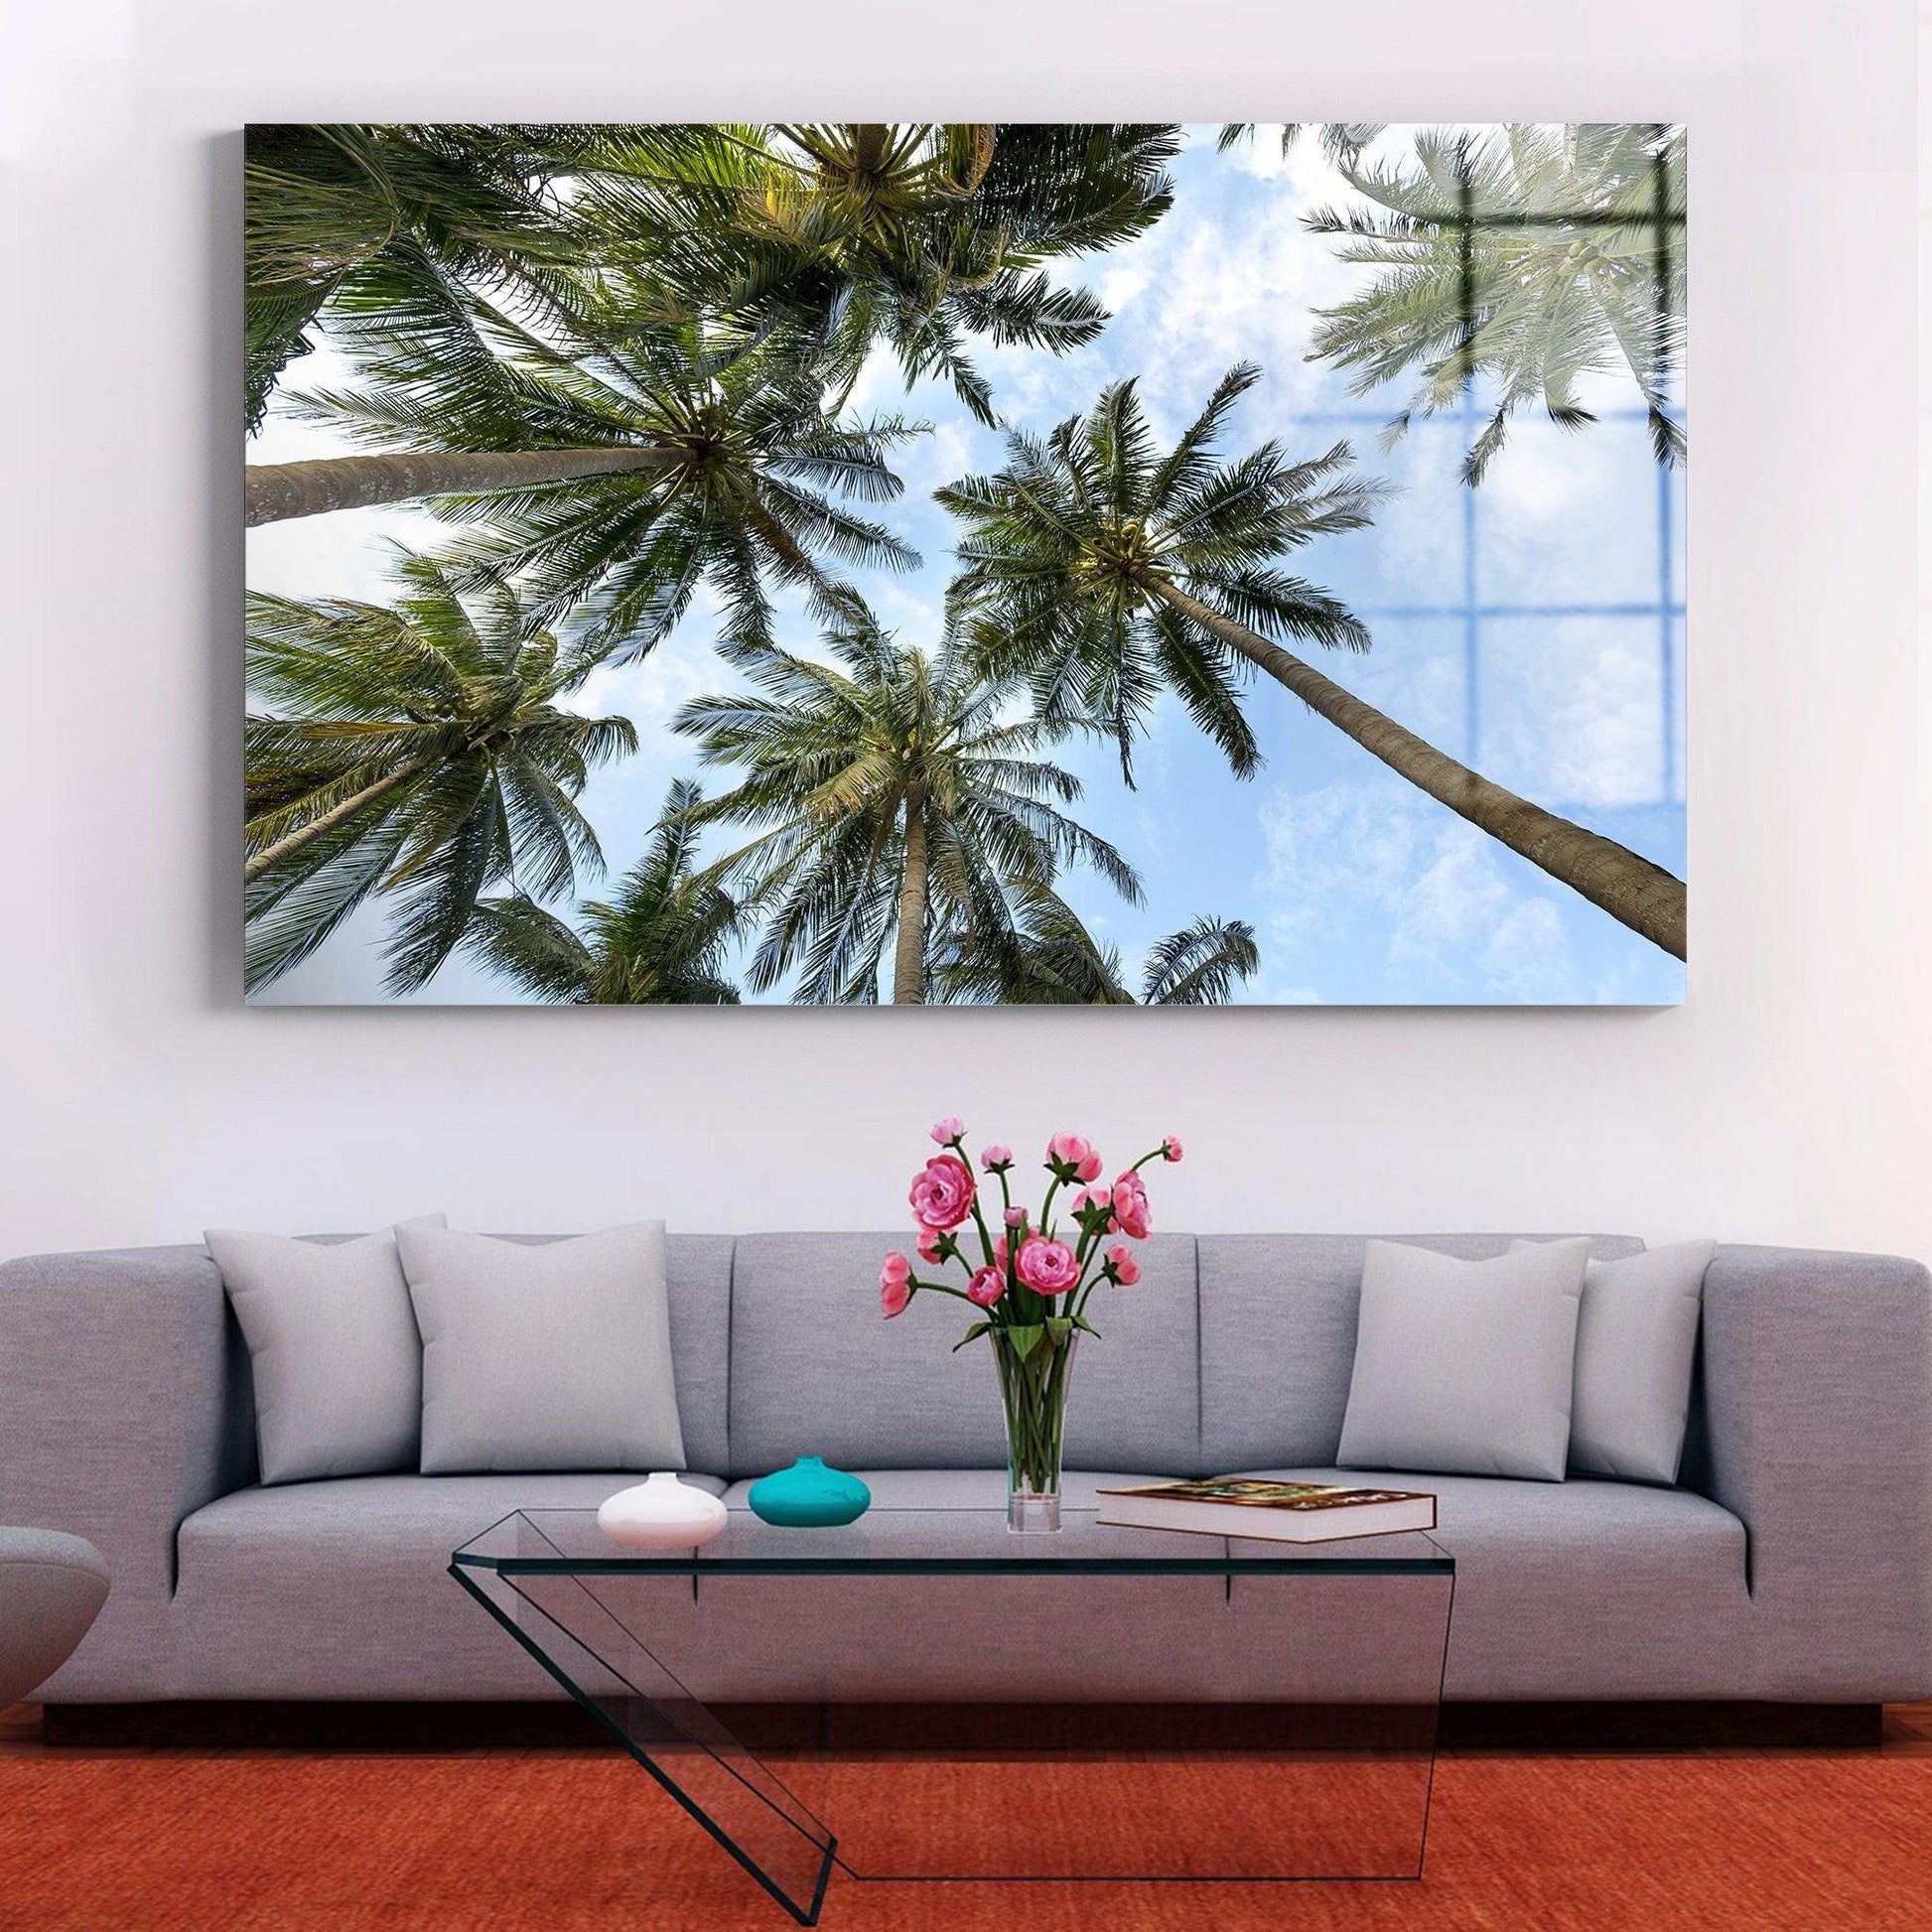 Palm trees glass wall art| Palm canvas wall art, Palm wall art, Palm home decor, Palm canvas art, glass wall art tree, trees wall art,